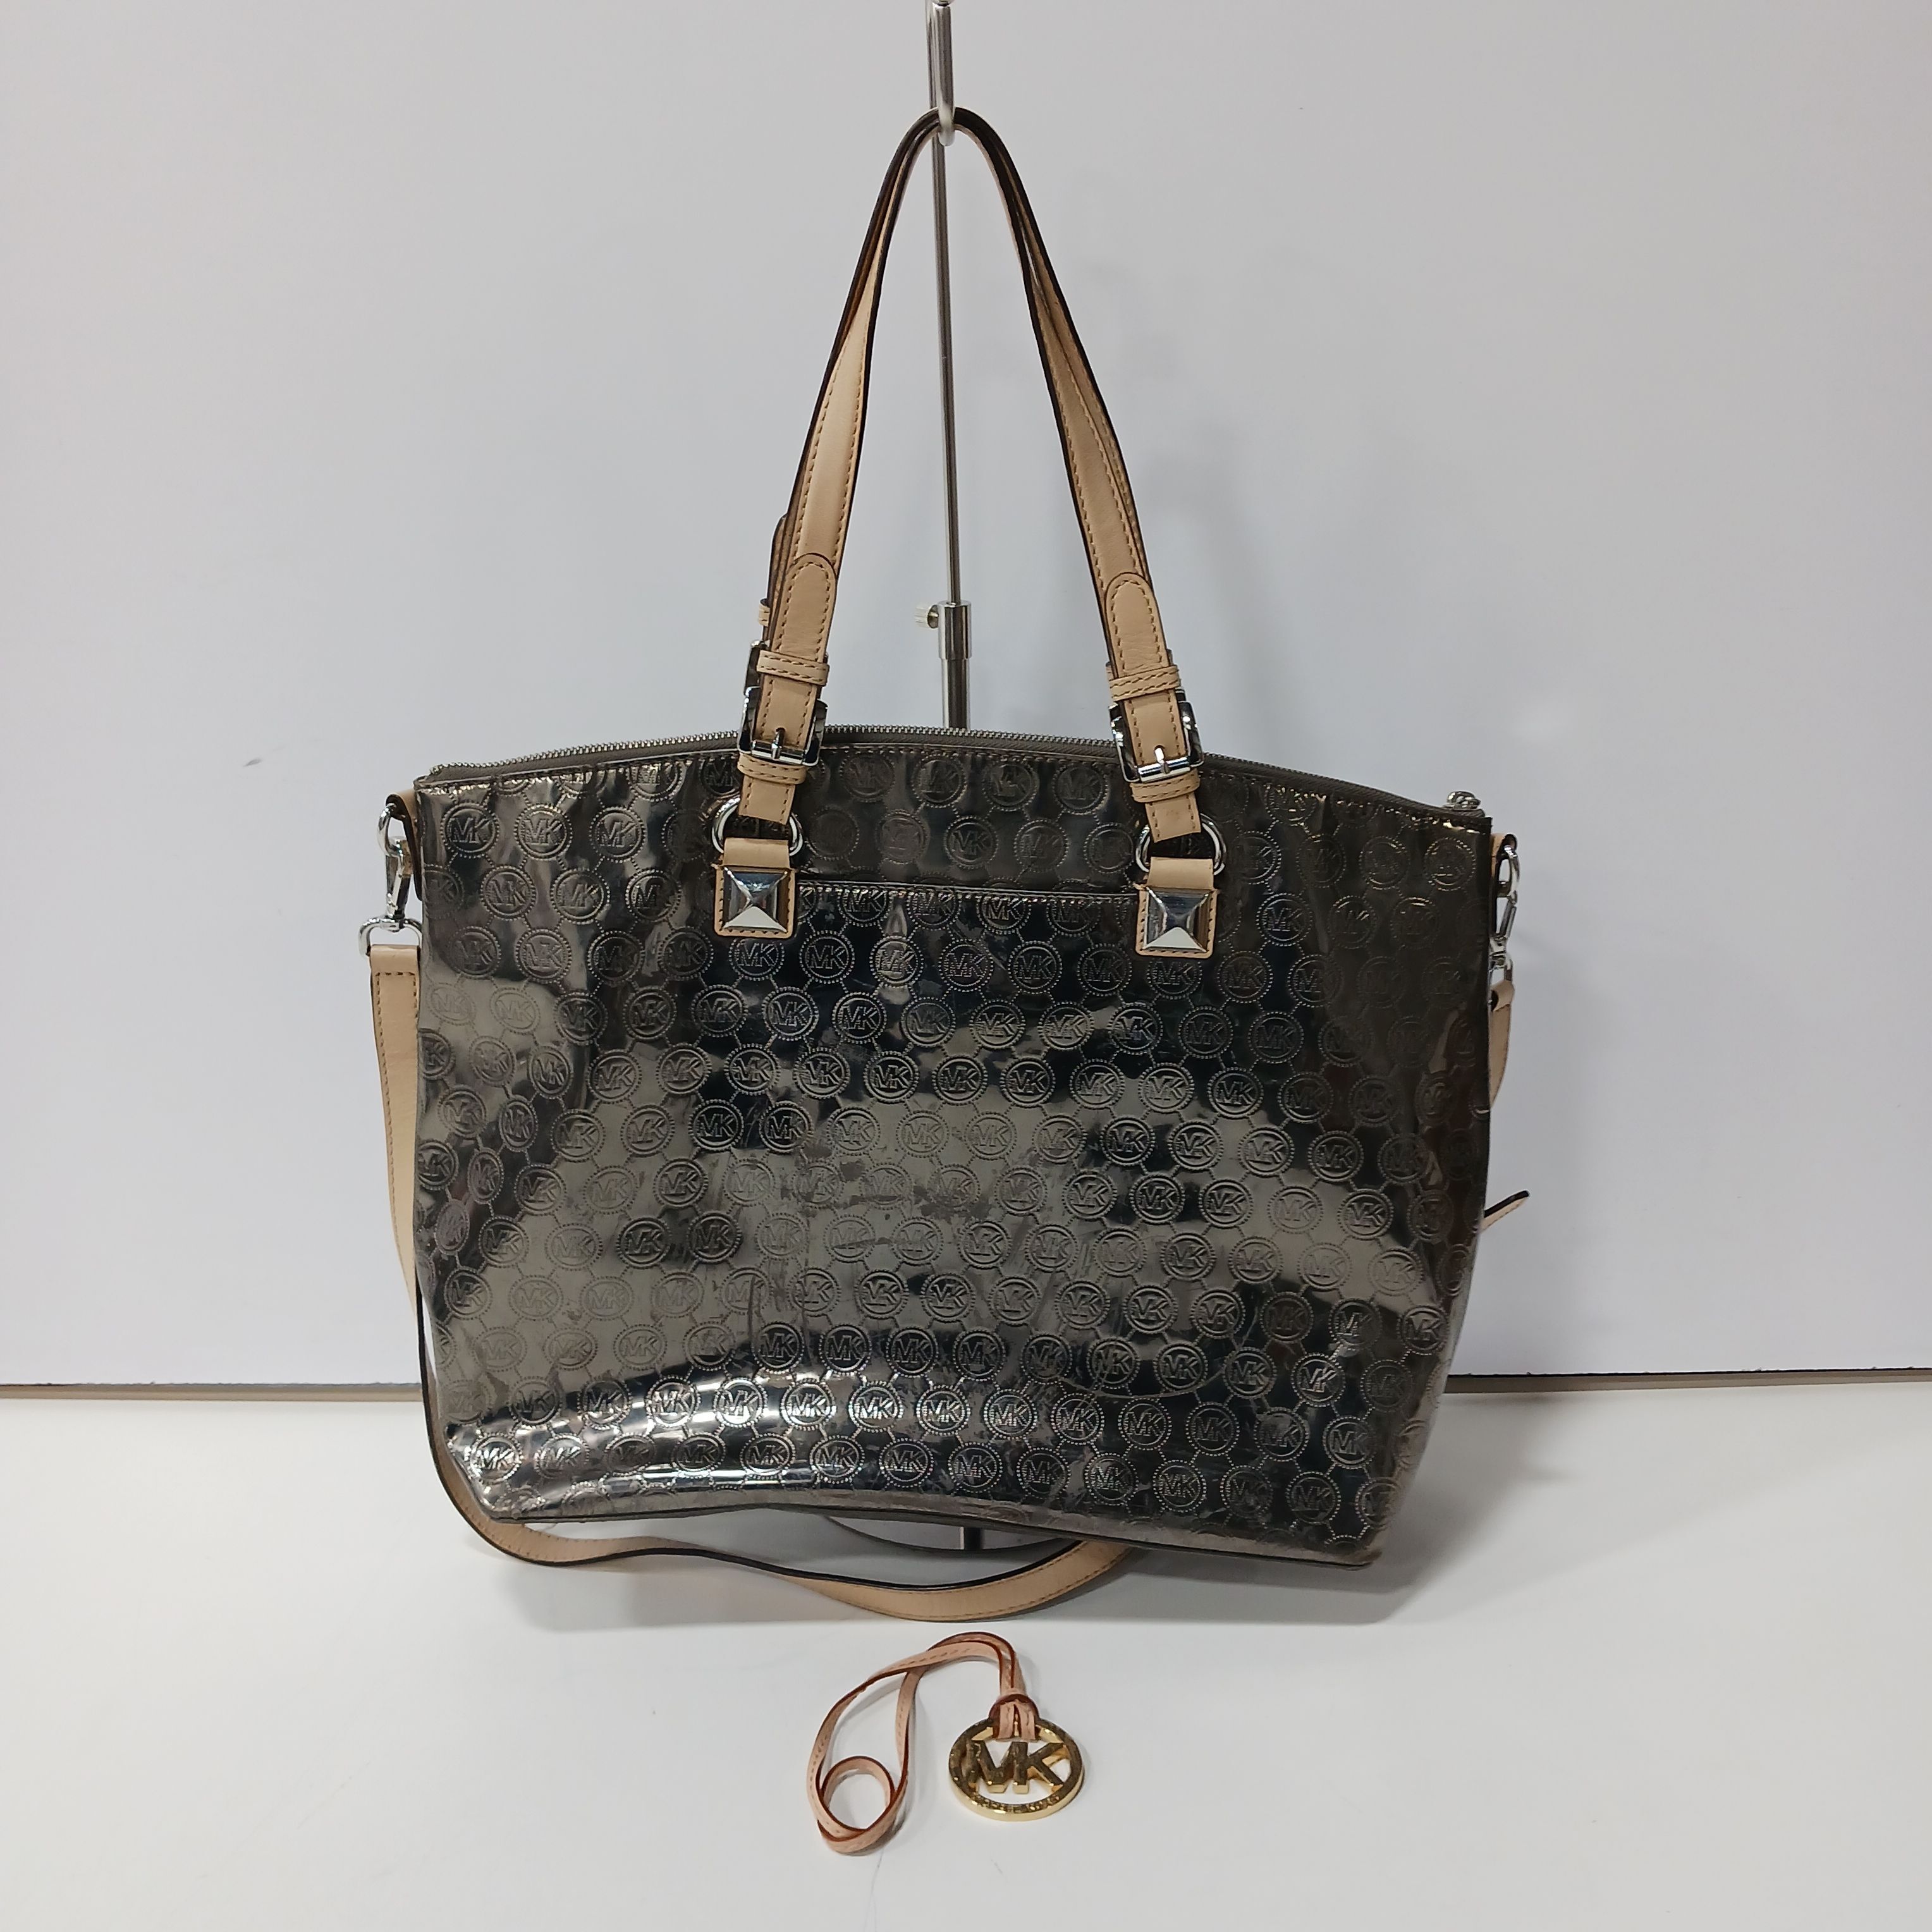 Michael Kors Snake Print Beige Shiny Leather Handbag Purse | eBay